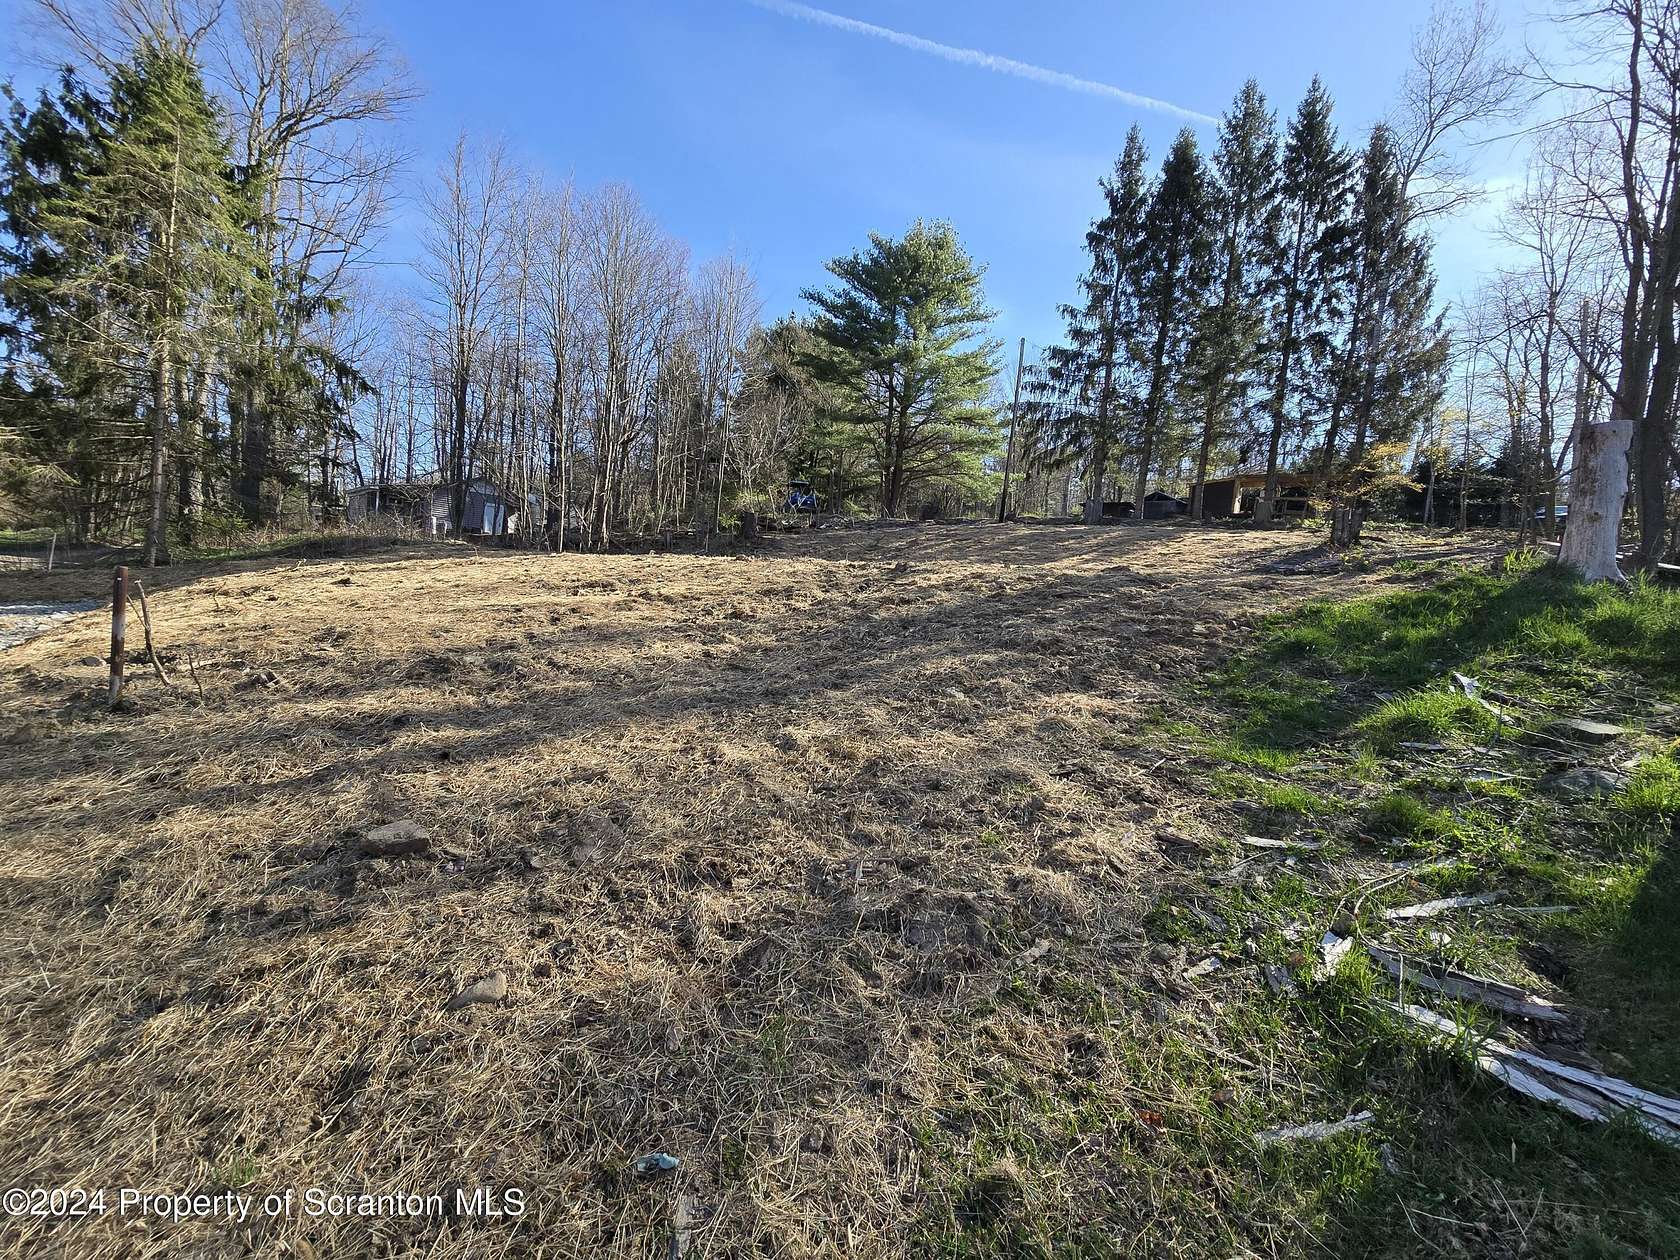 0.19 Acres of Land for Sale in Brackney, Pennsylvania